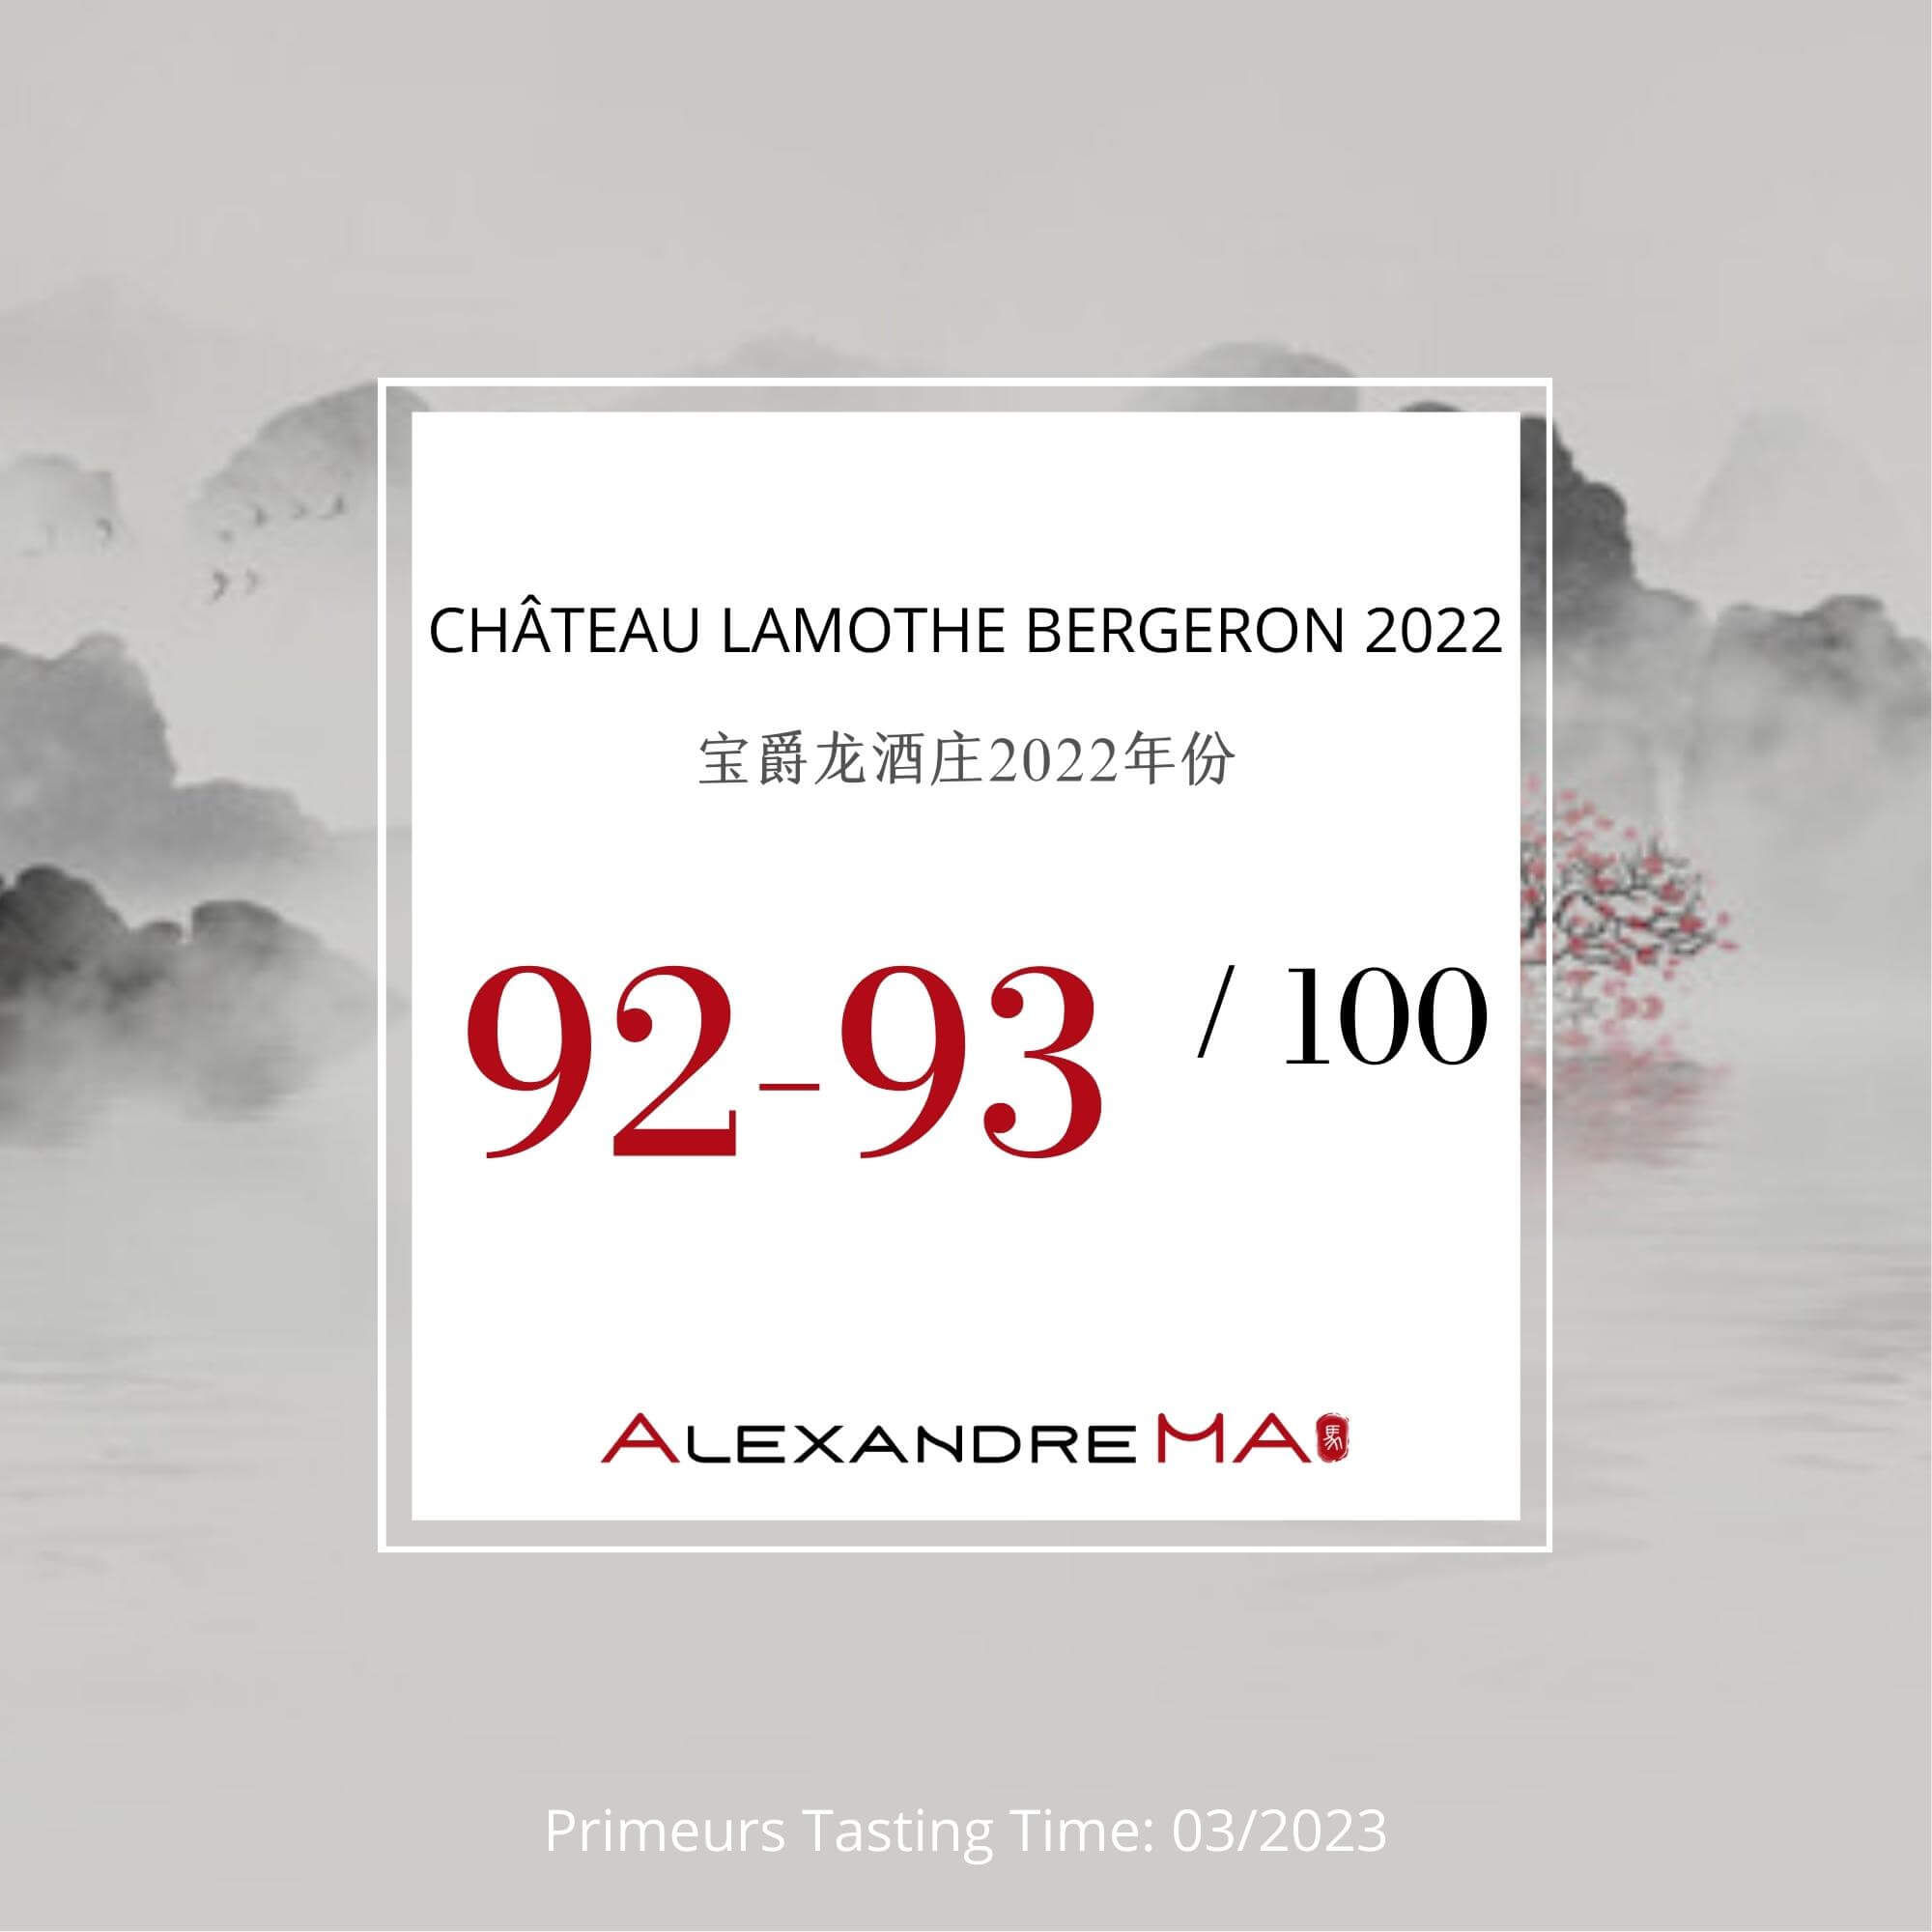 Château Lamothe Bergeron 2022 Primeurs - Alexandre MA